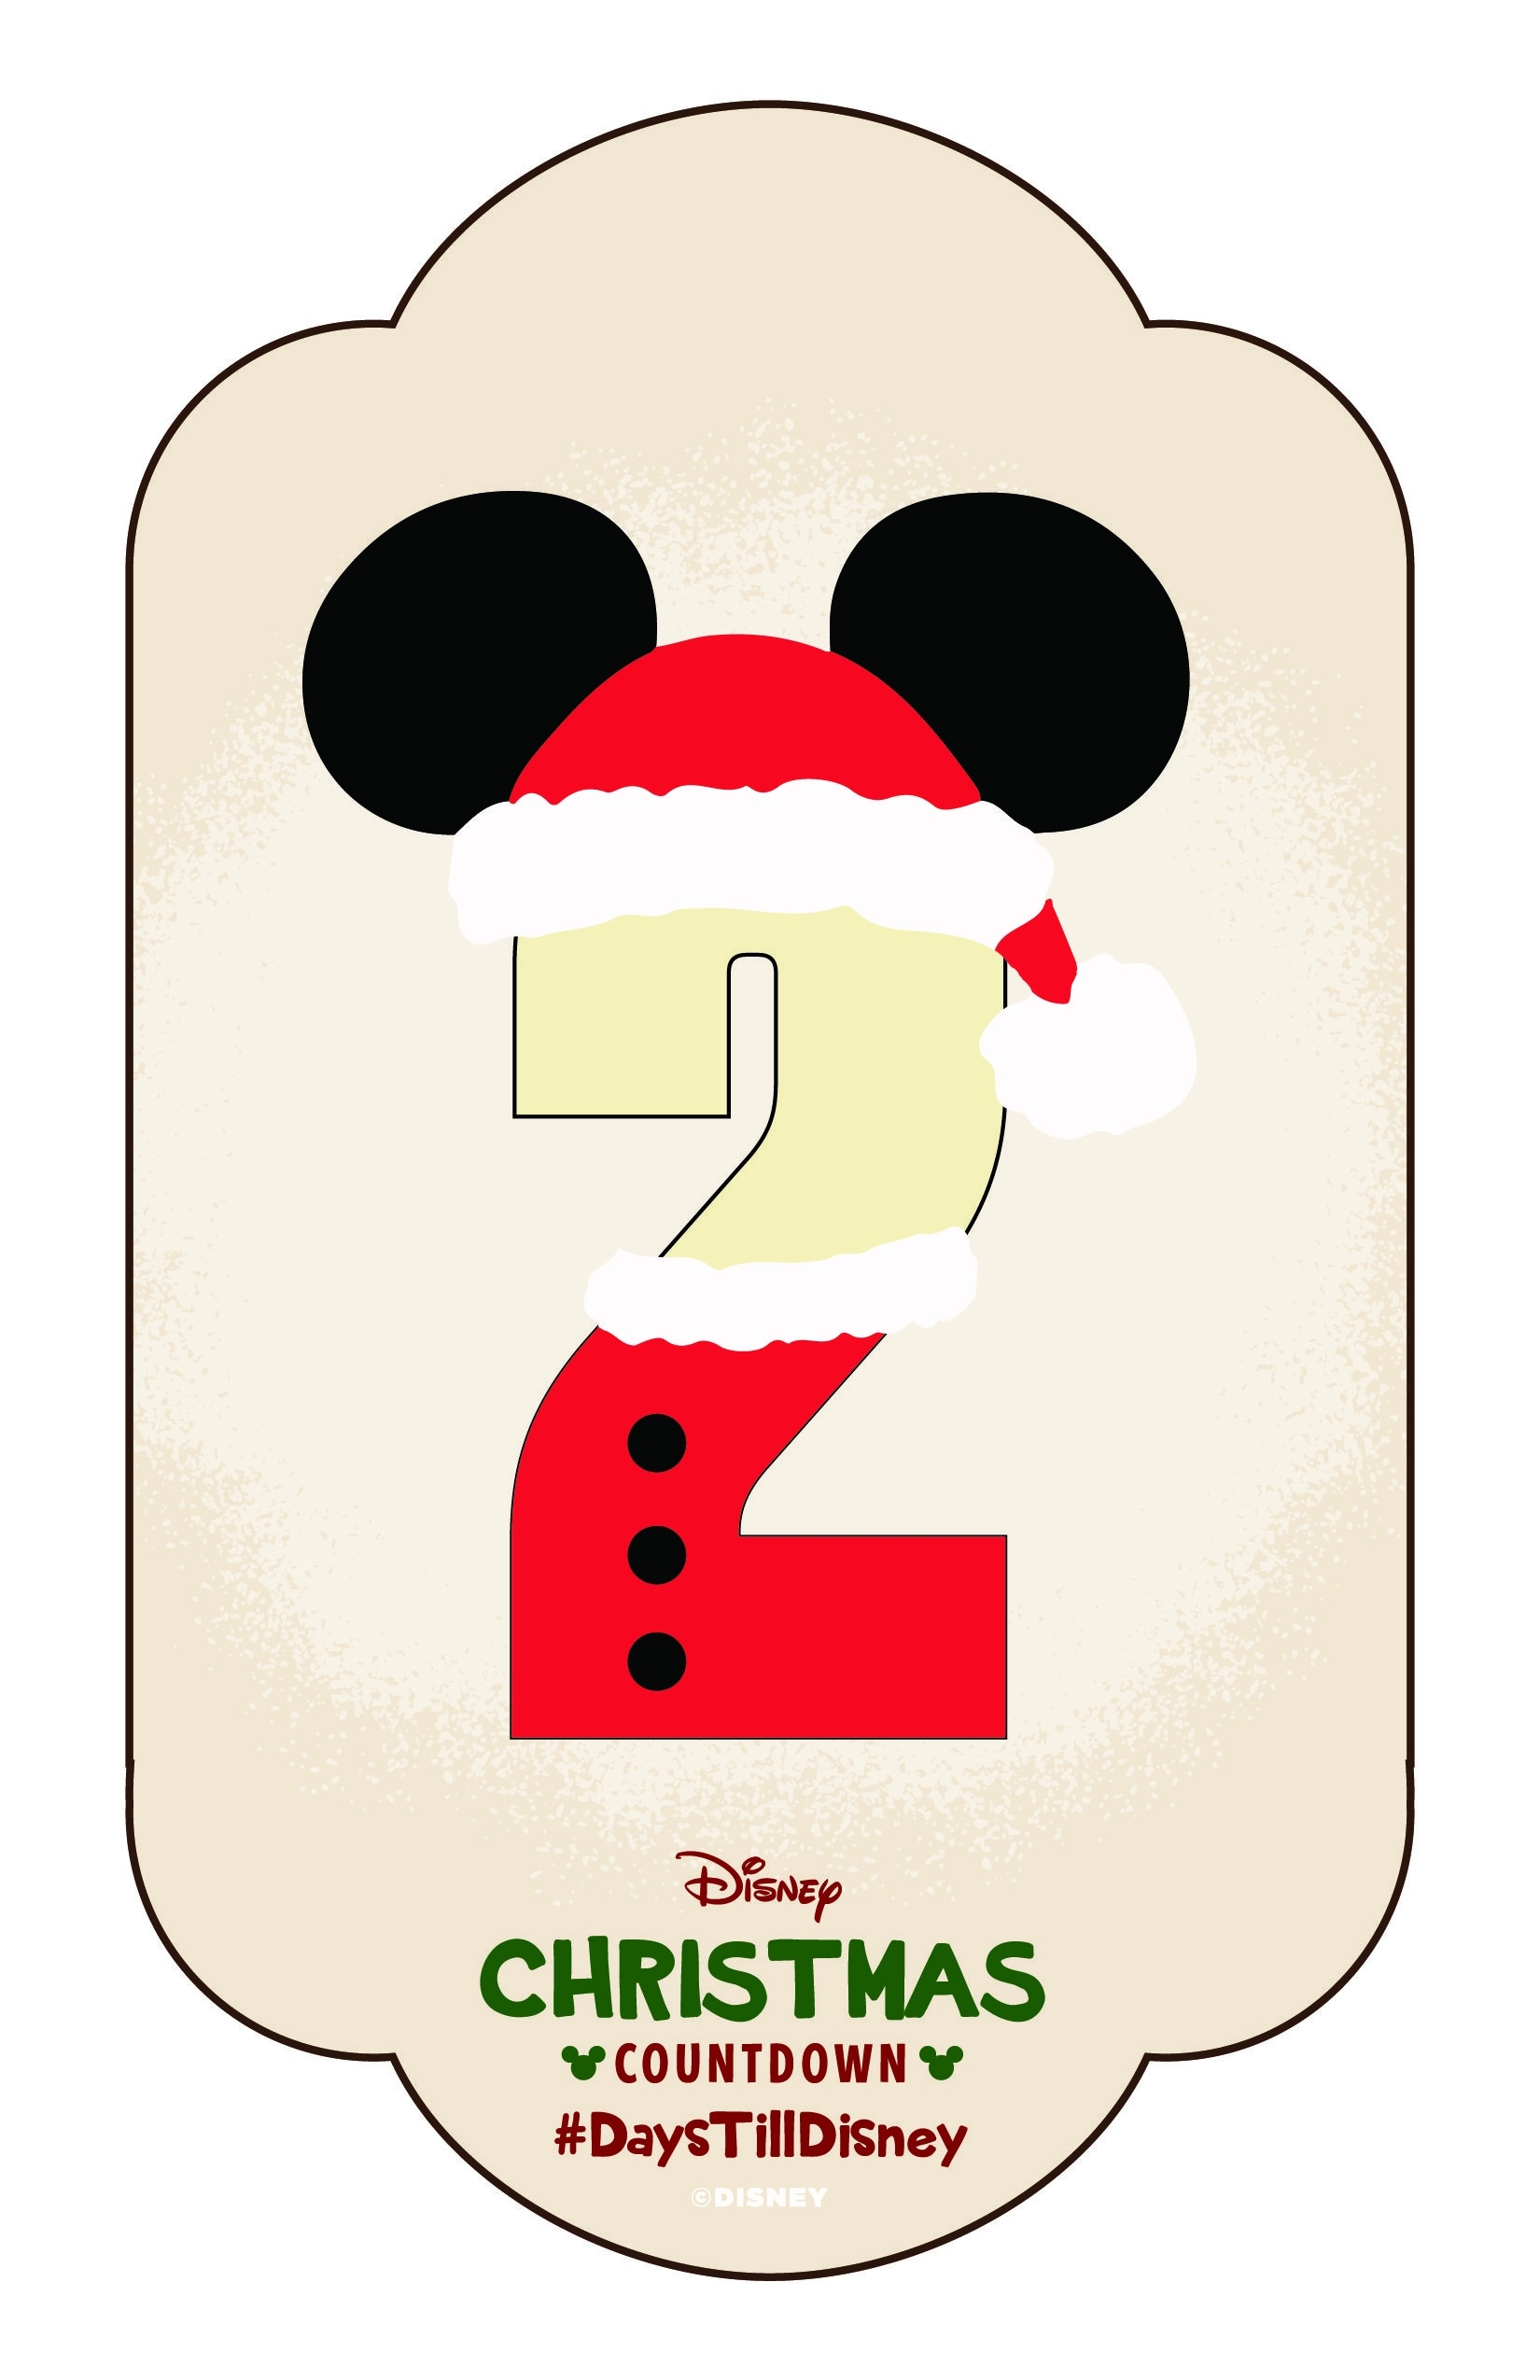 Diy: Create-Your-Own Walt Disney World Vacation Countdown | Disney Disney Countdown Calendar Uk